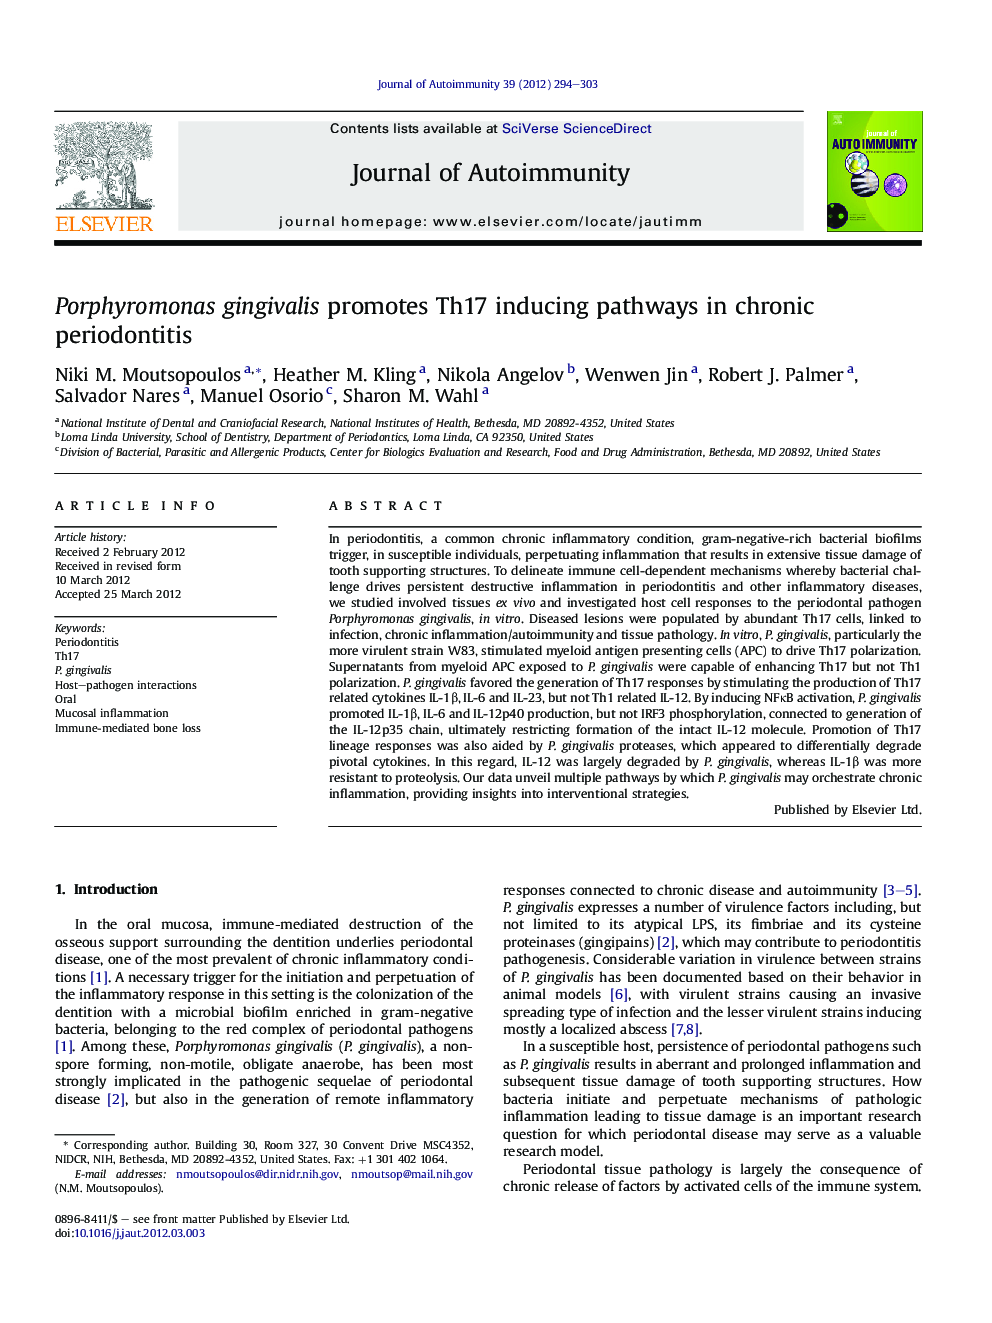 Porphyromonas gingivalis promotes Th17 inducing pathways in chronic periodontitis